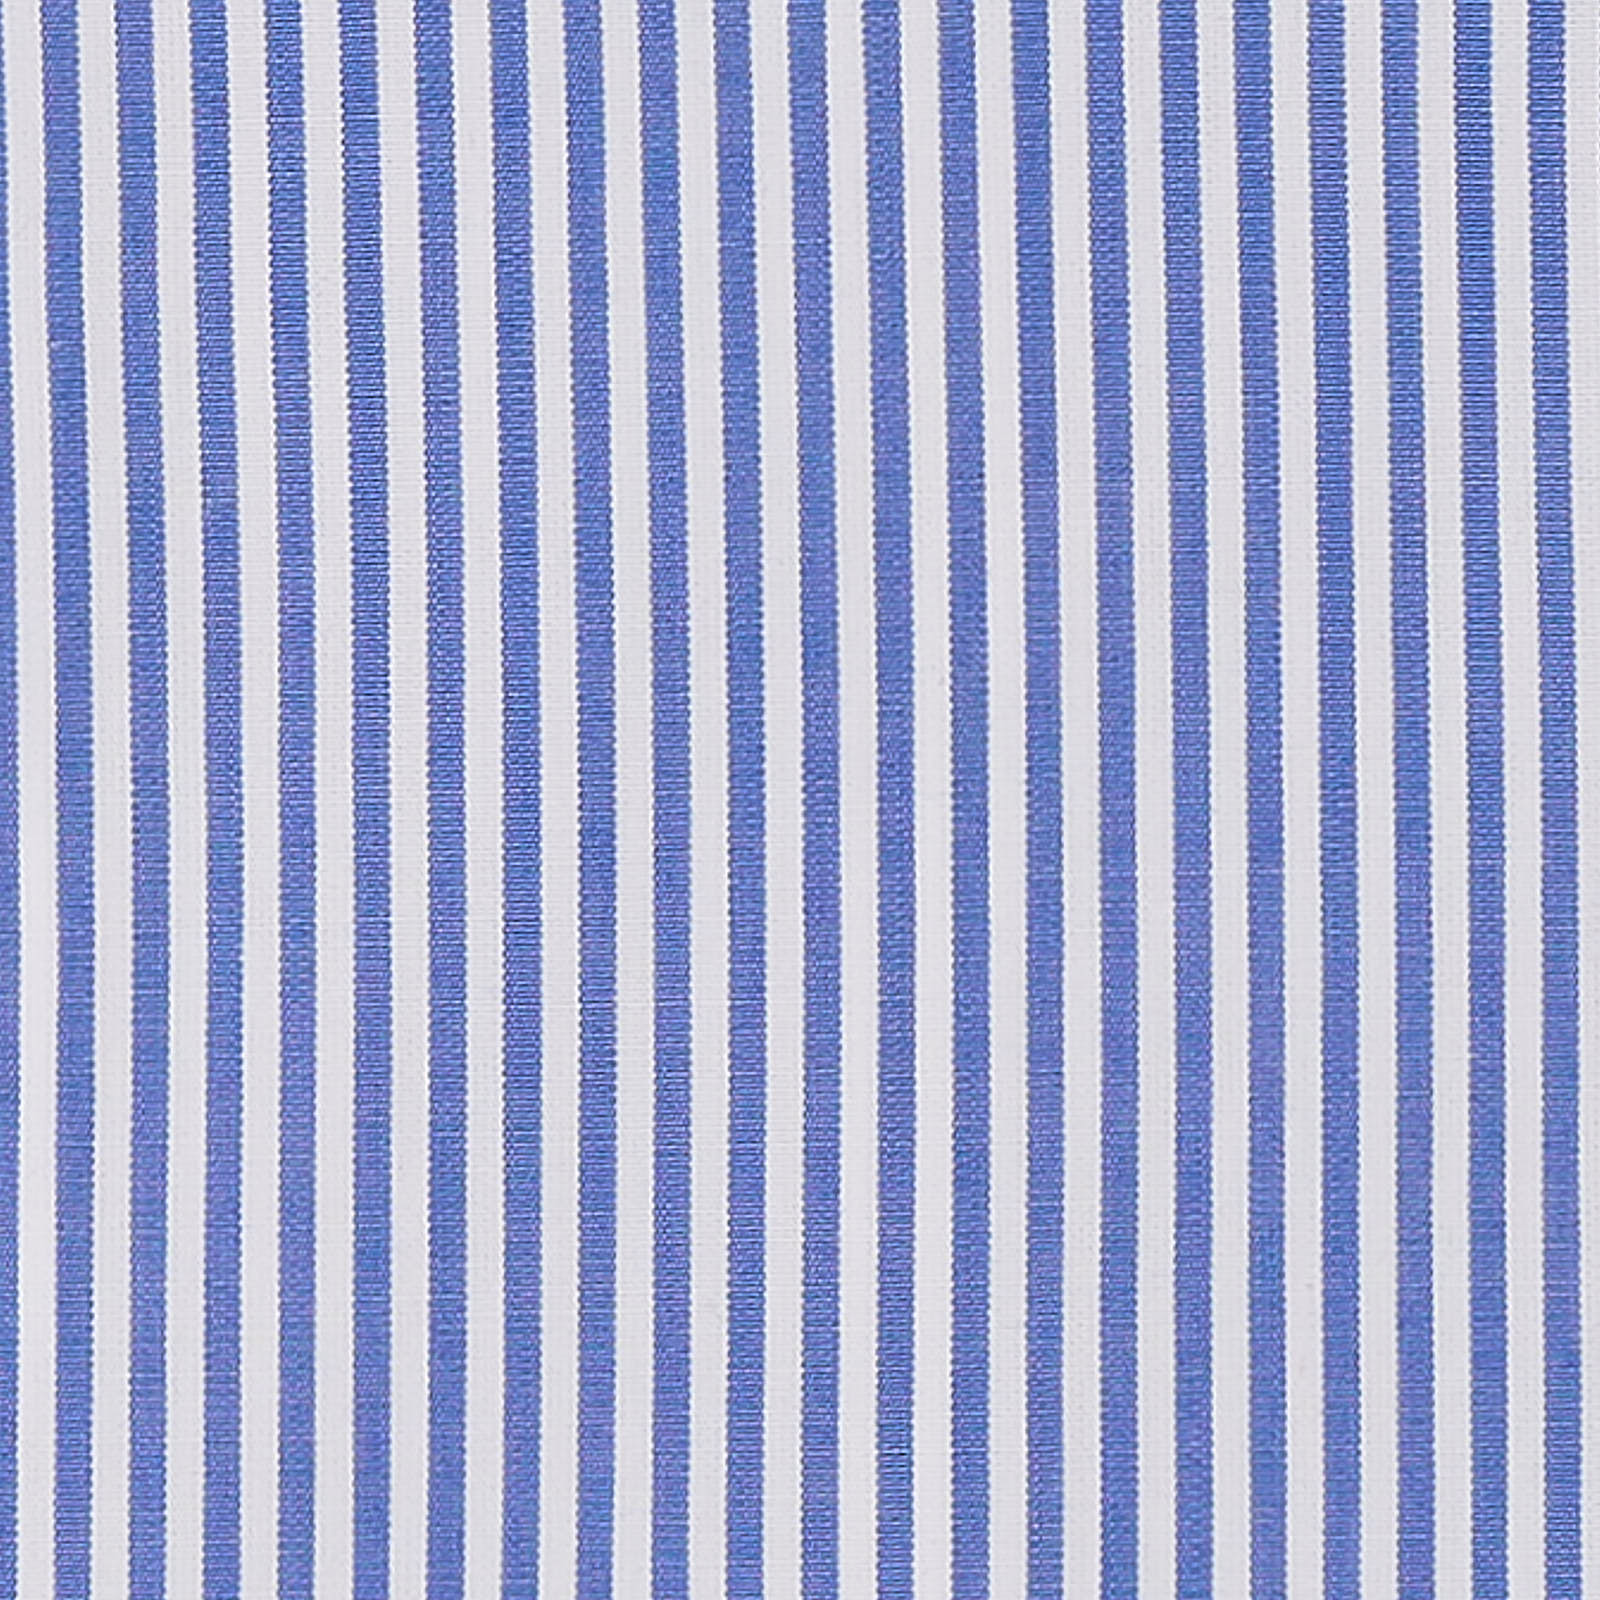 BESPOKE ATHENS Handmade Blue Striped Cotton Poplin Dress Shirt NEW